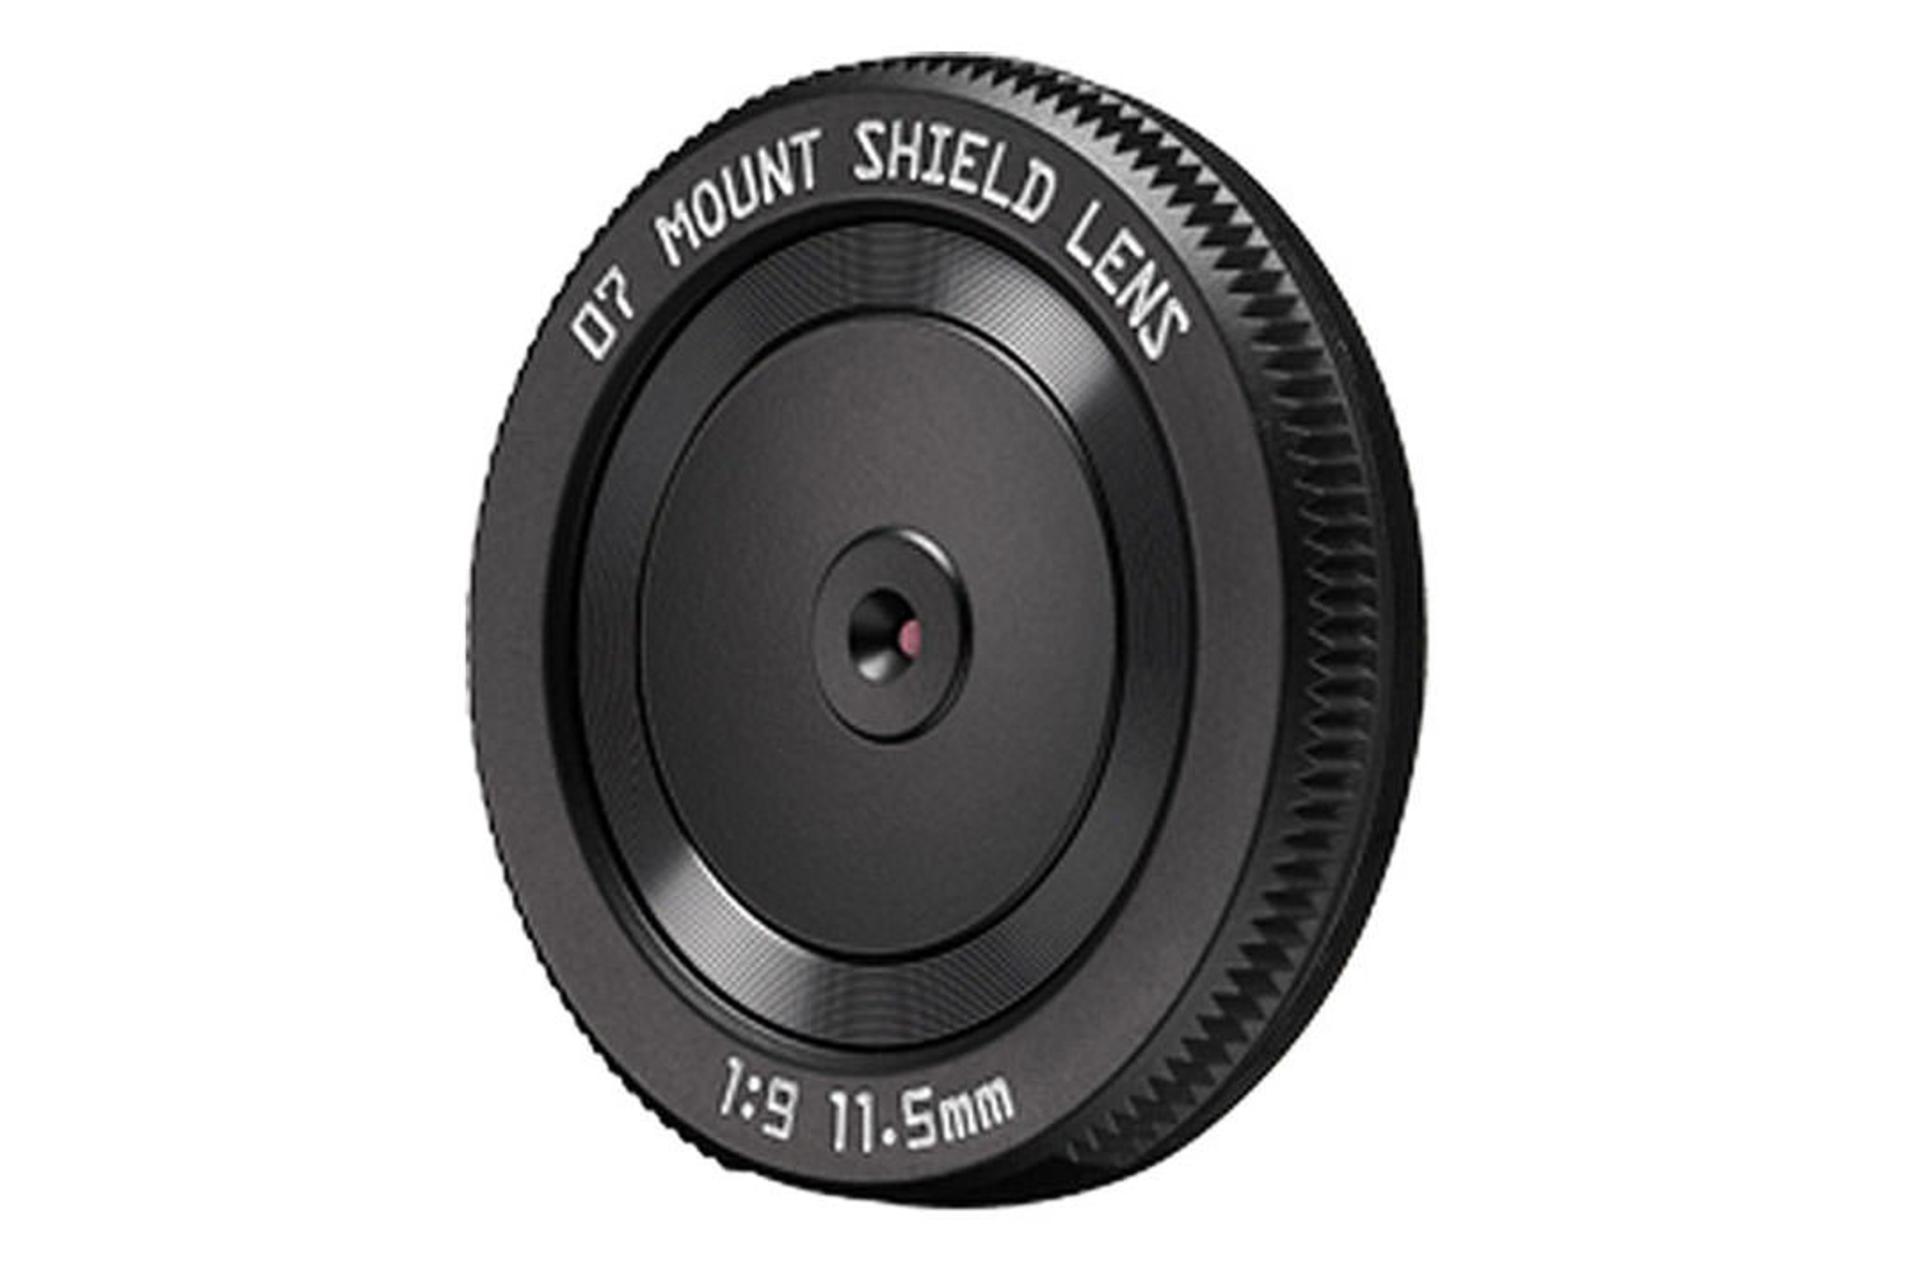 Pentax 07 Mount Shield Lens	